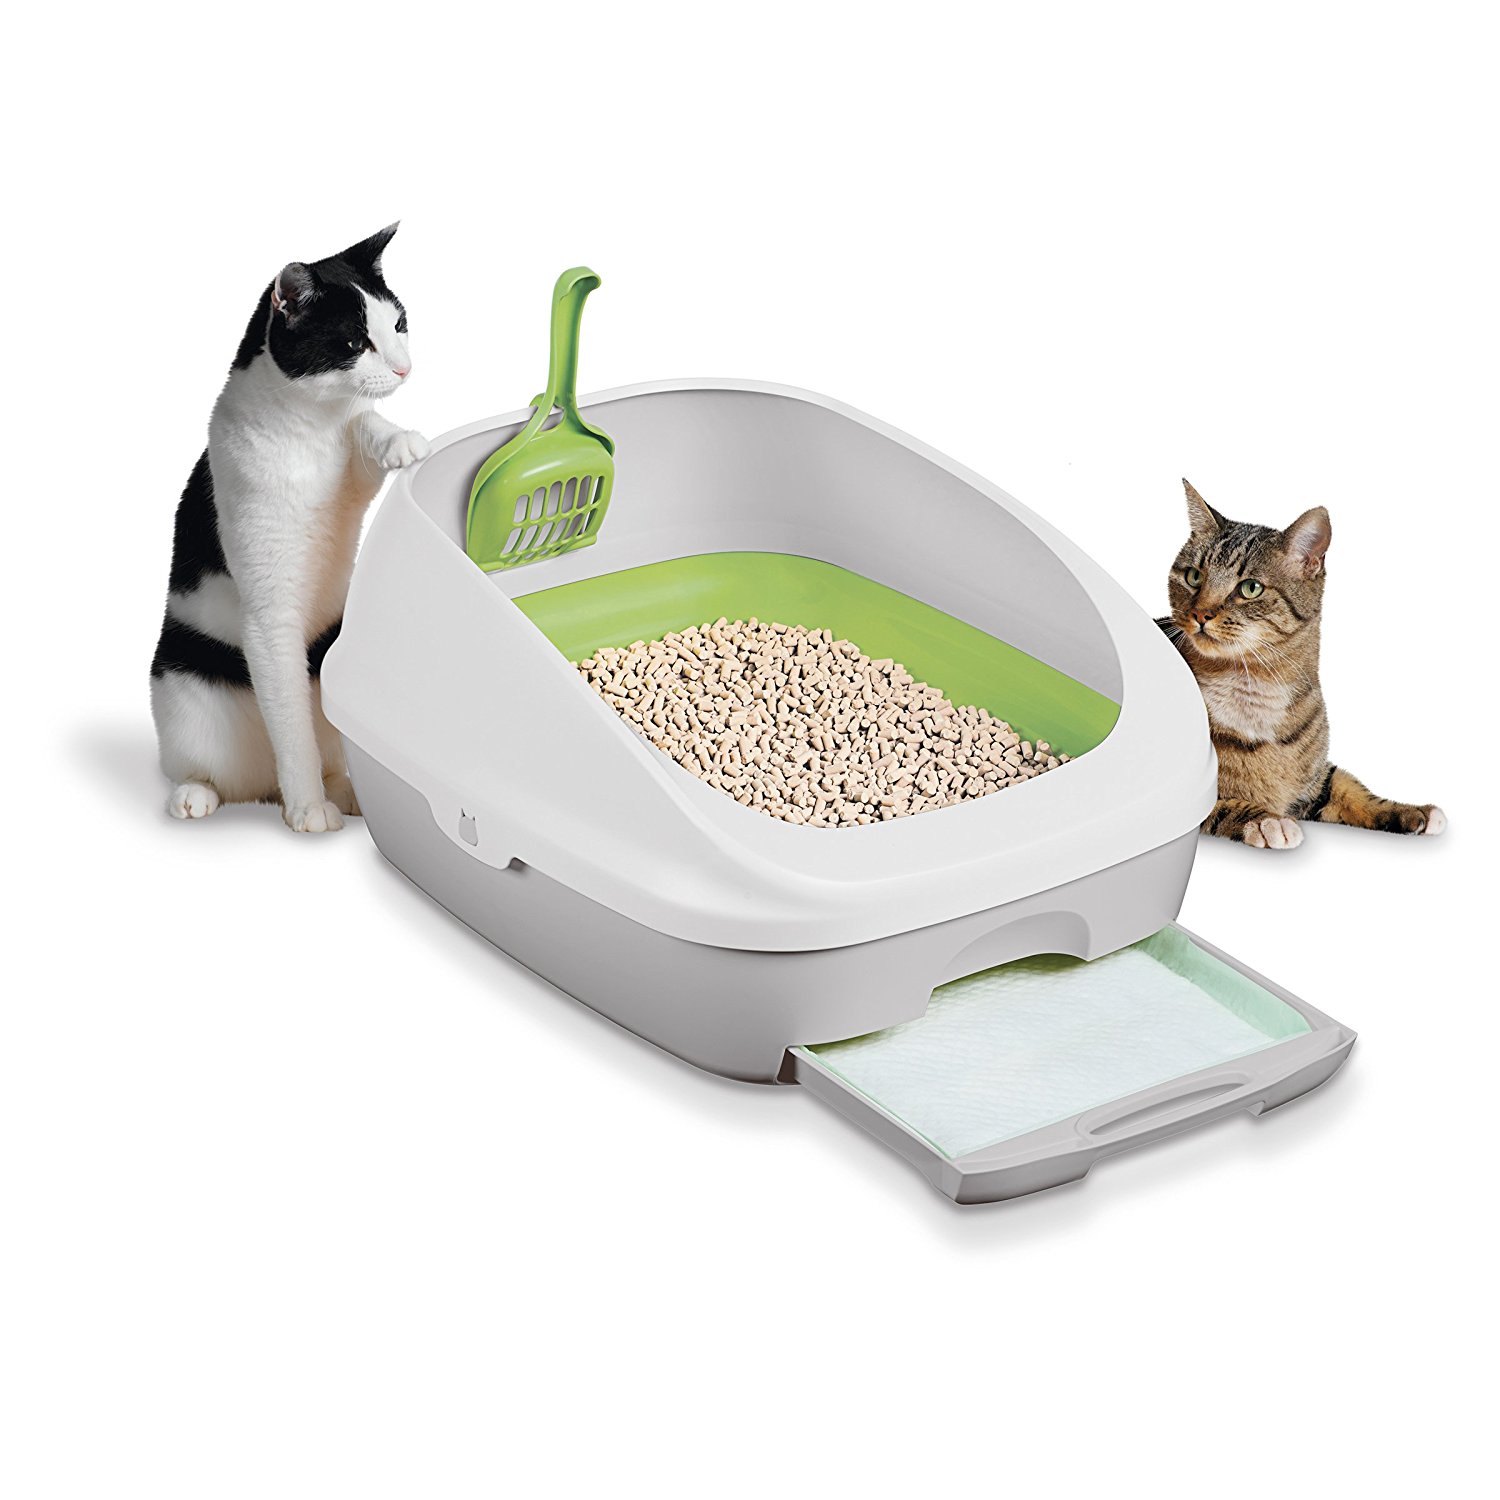 Amazon Tidy Cat Breeze Litter Box System Kit Only 18 64 Shipped Regularly 26 99